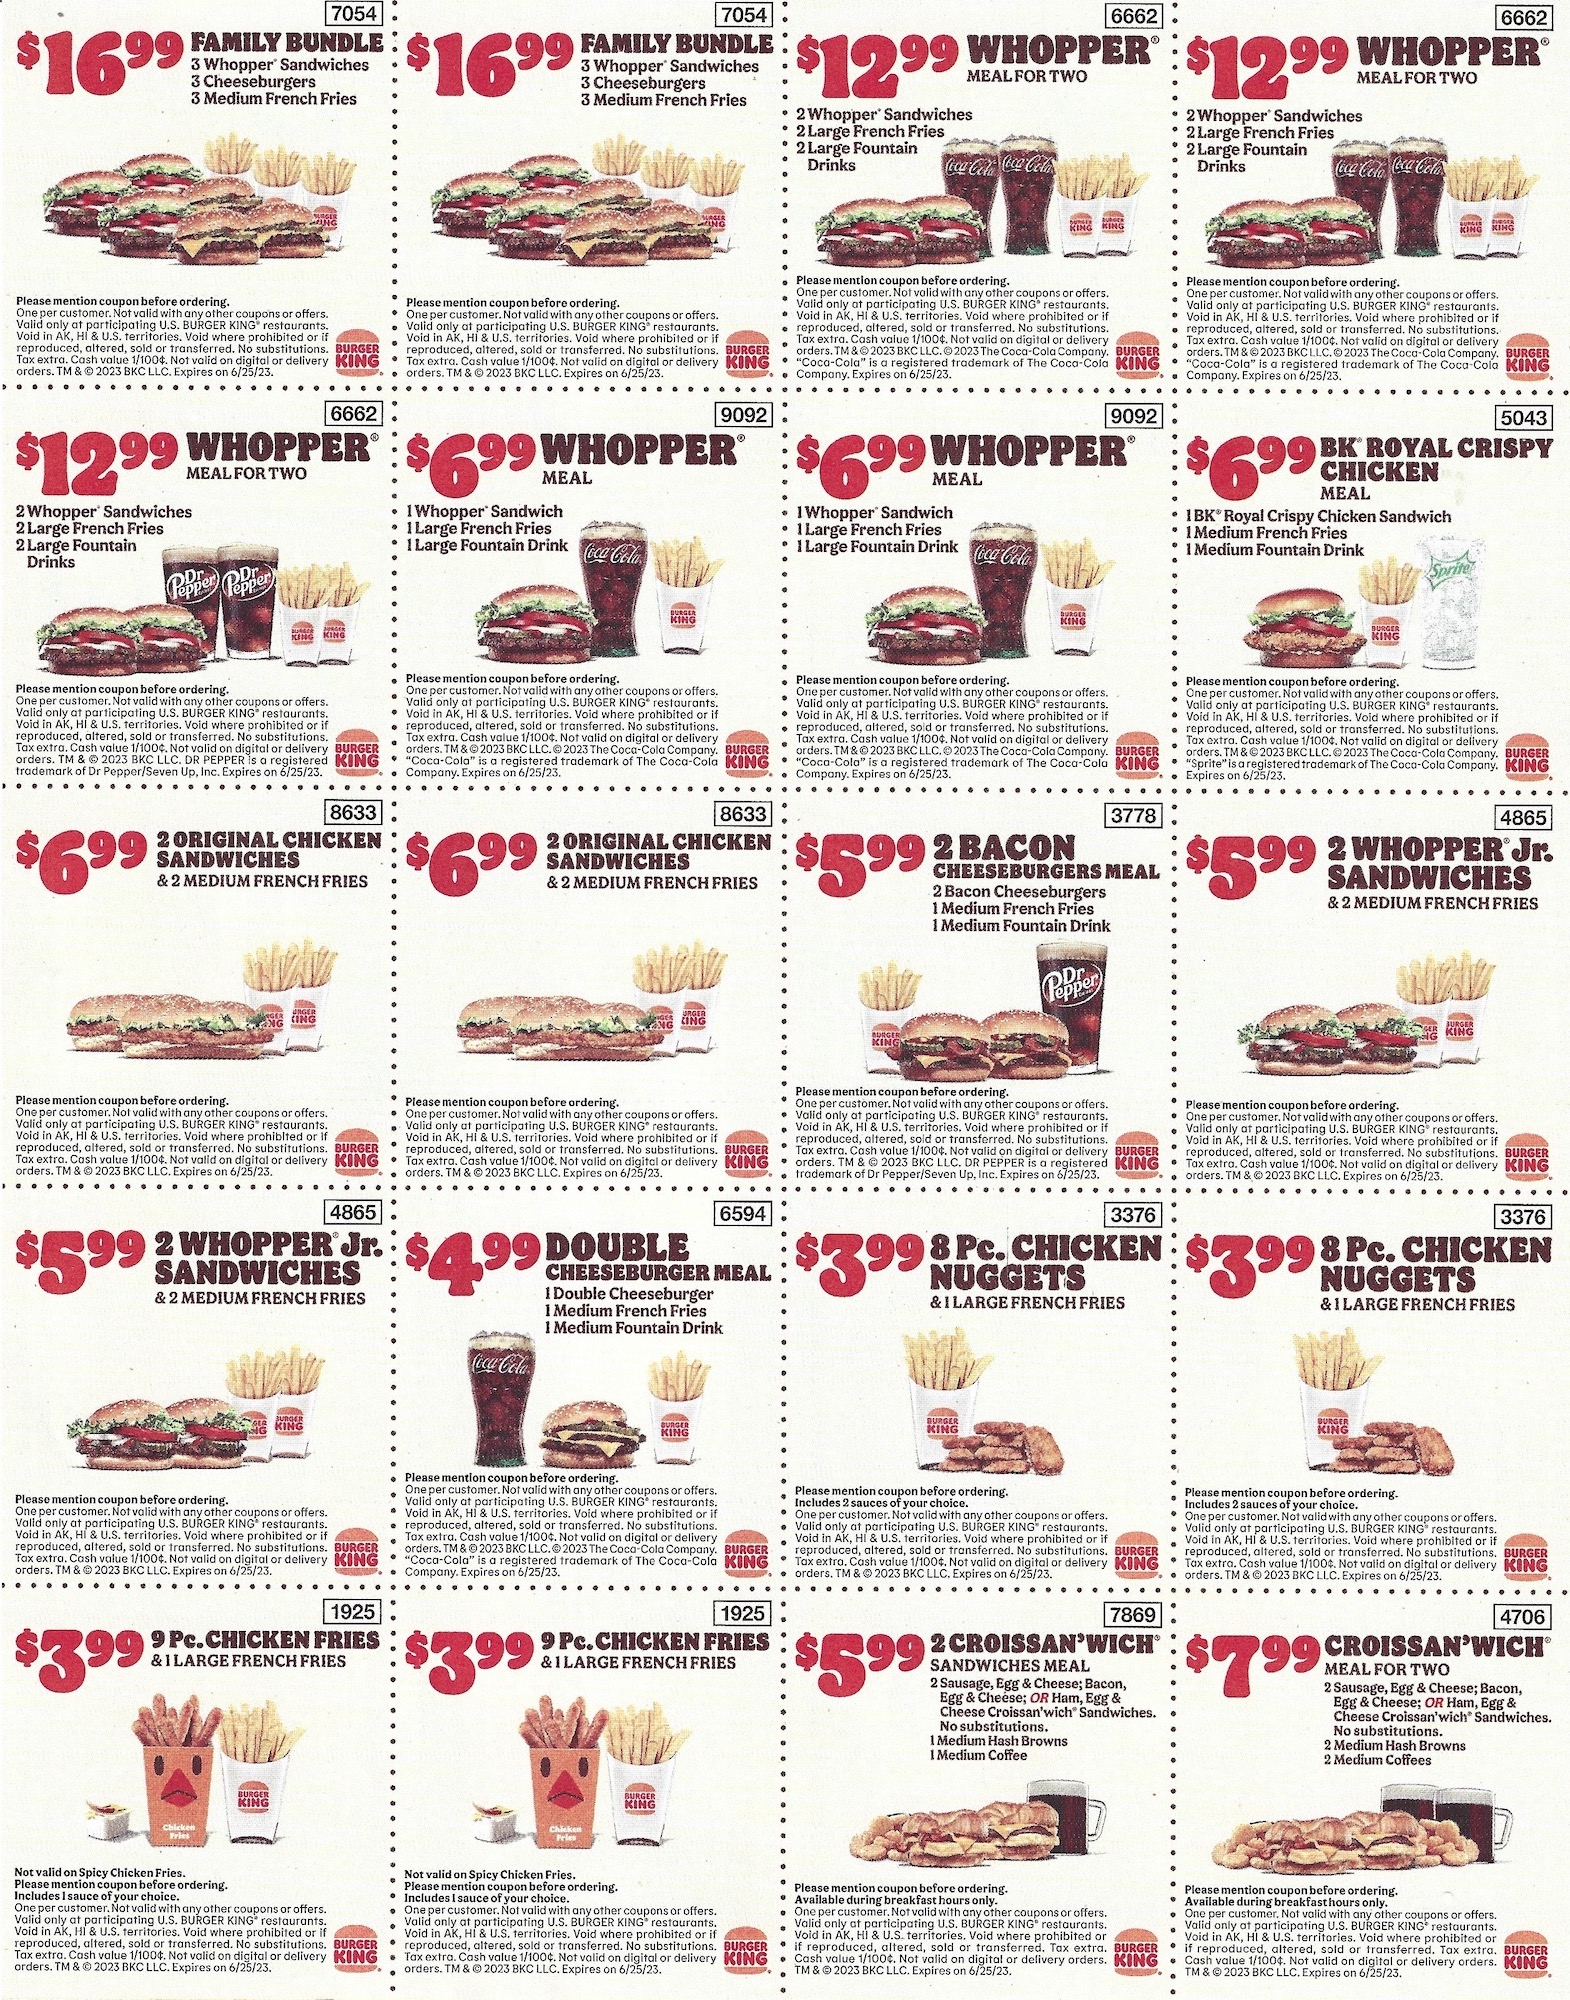 Burger King Coupons Expires 06 25 2023 - Burger King Free Coupons Printable